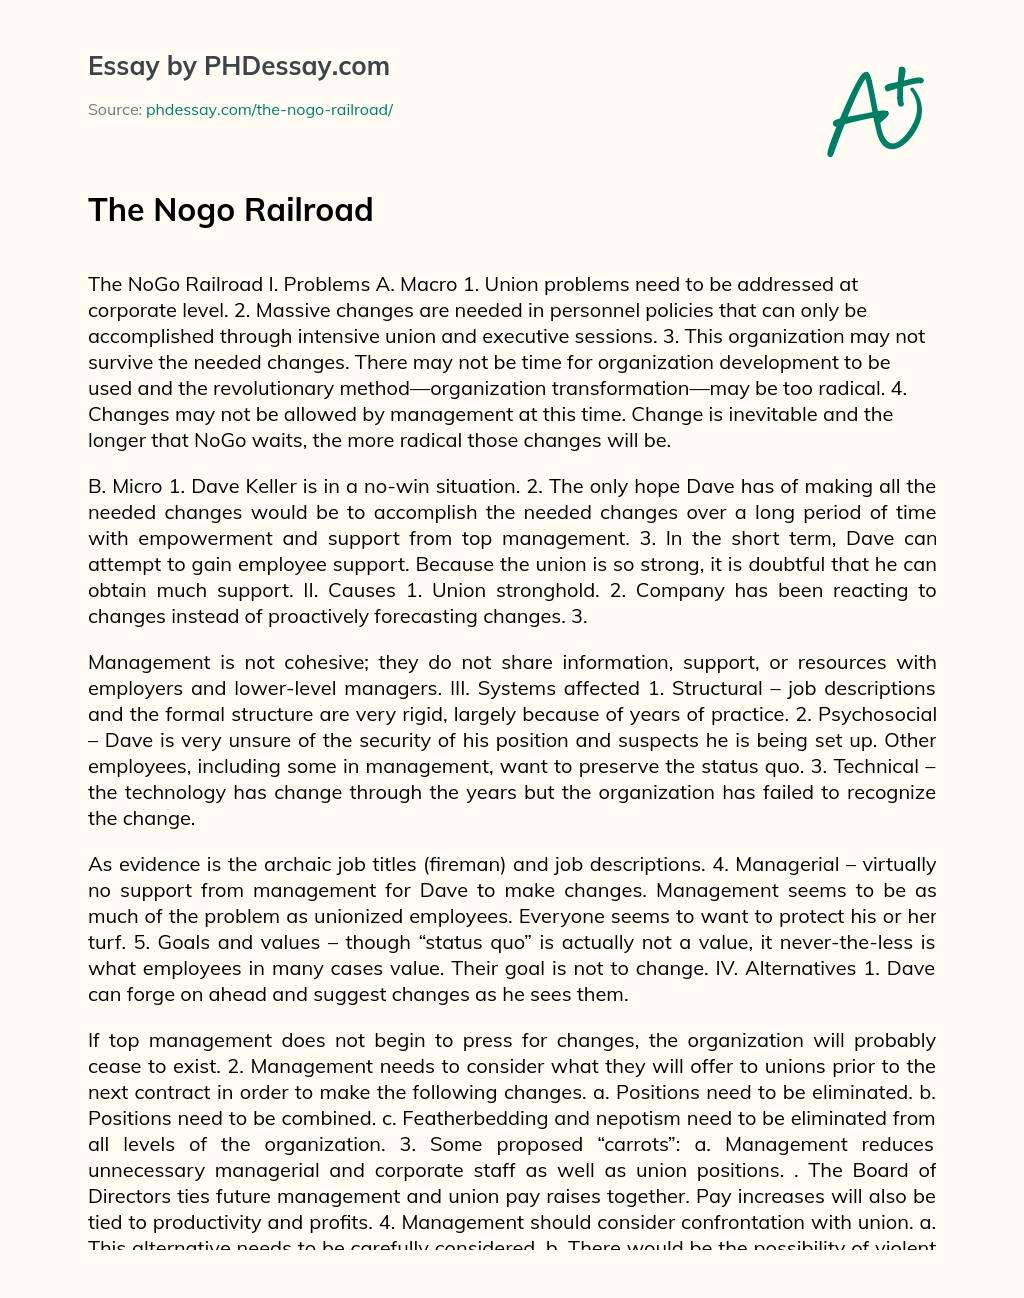 The Nogo Railroad essay